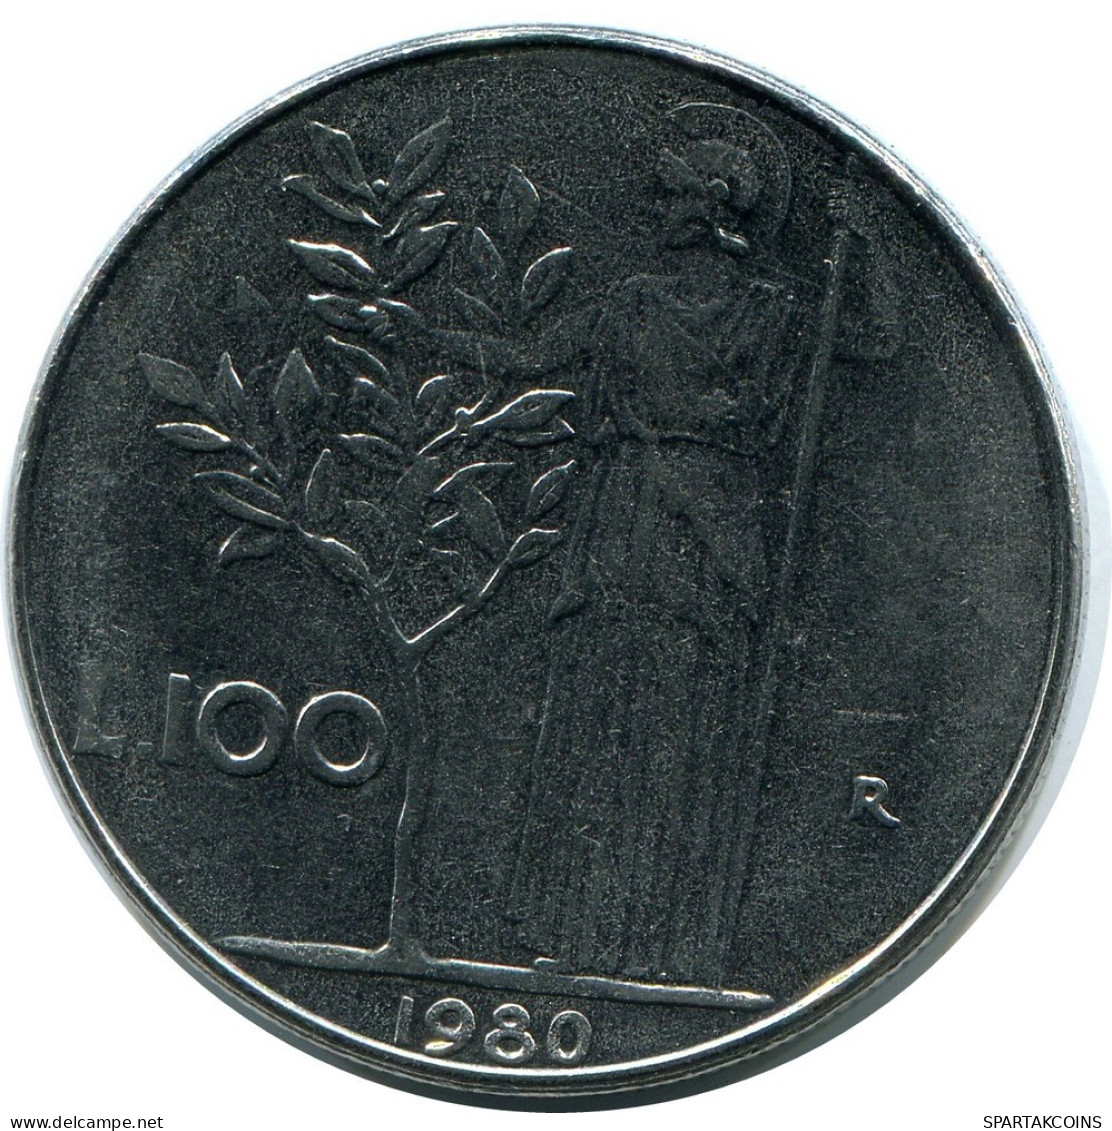 100 LIRE 1980 ITALY Coin #AZ487.U.A - 100 Lire